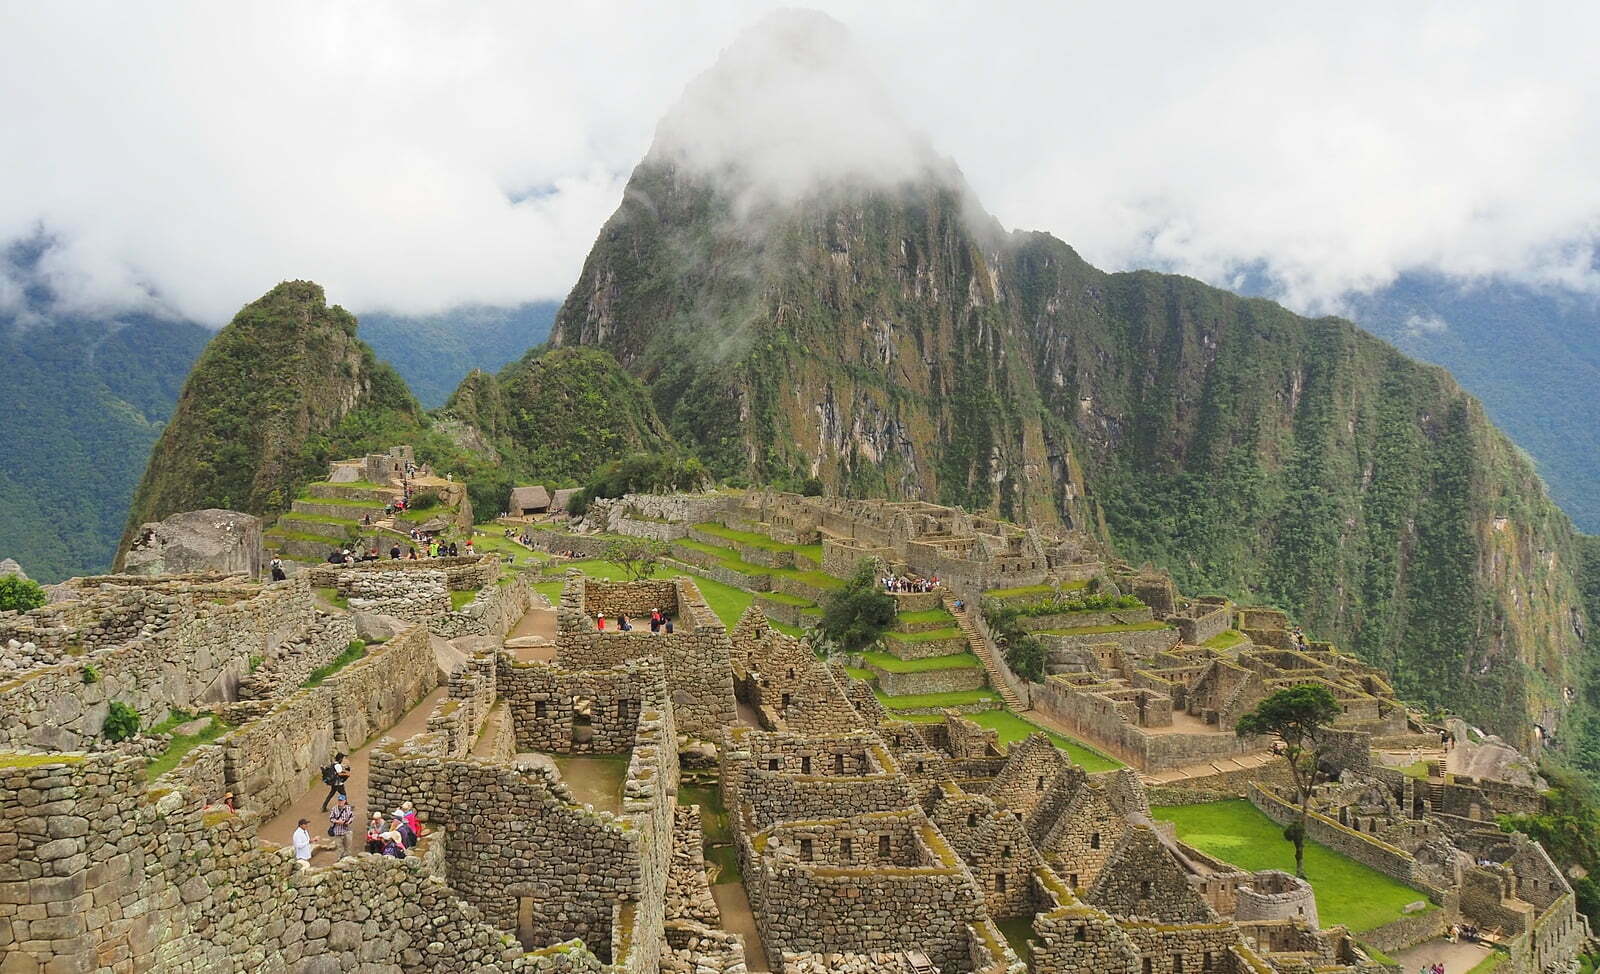 Views of Machu Picchu during our visit to Peru